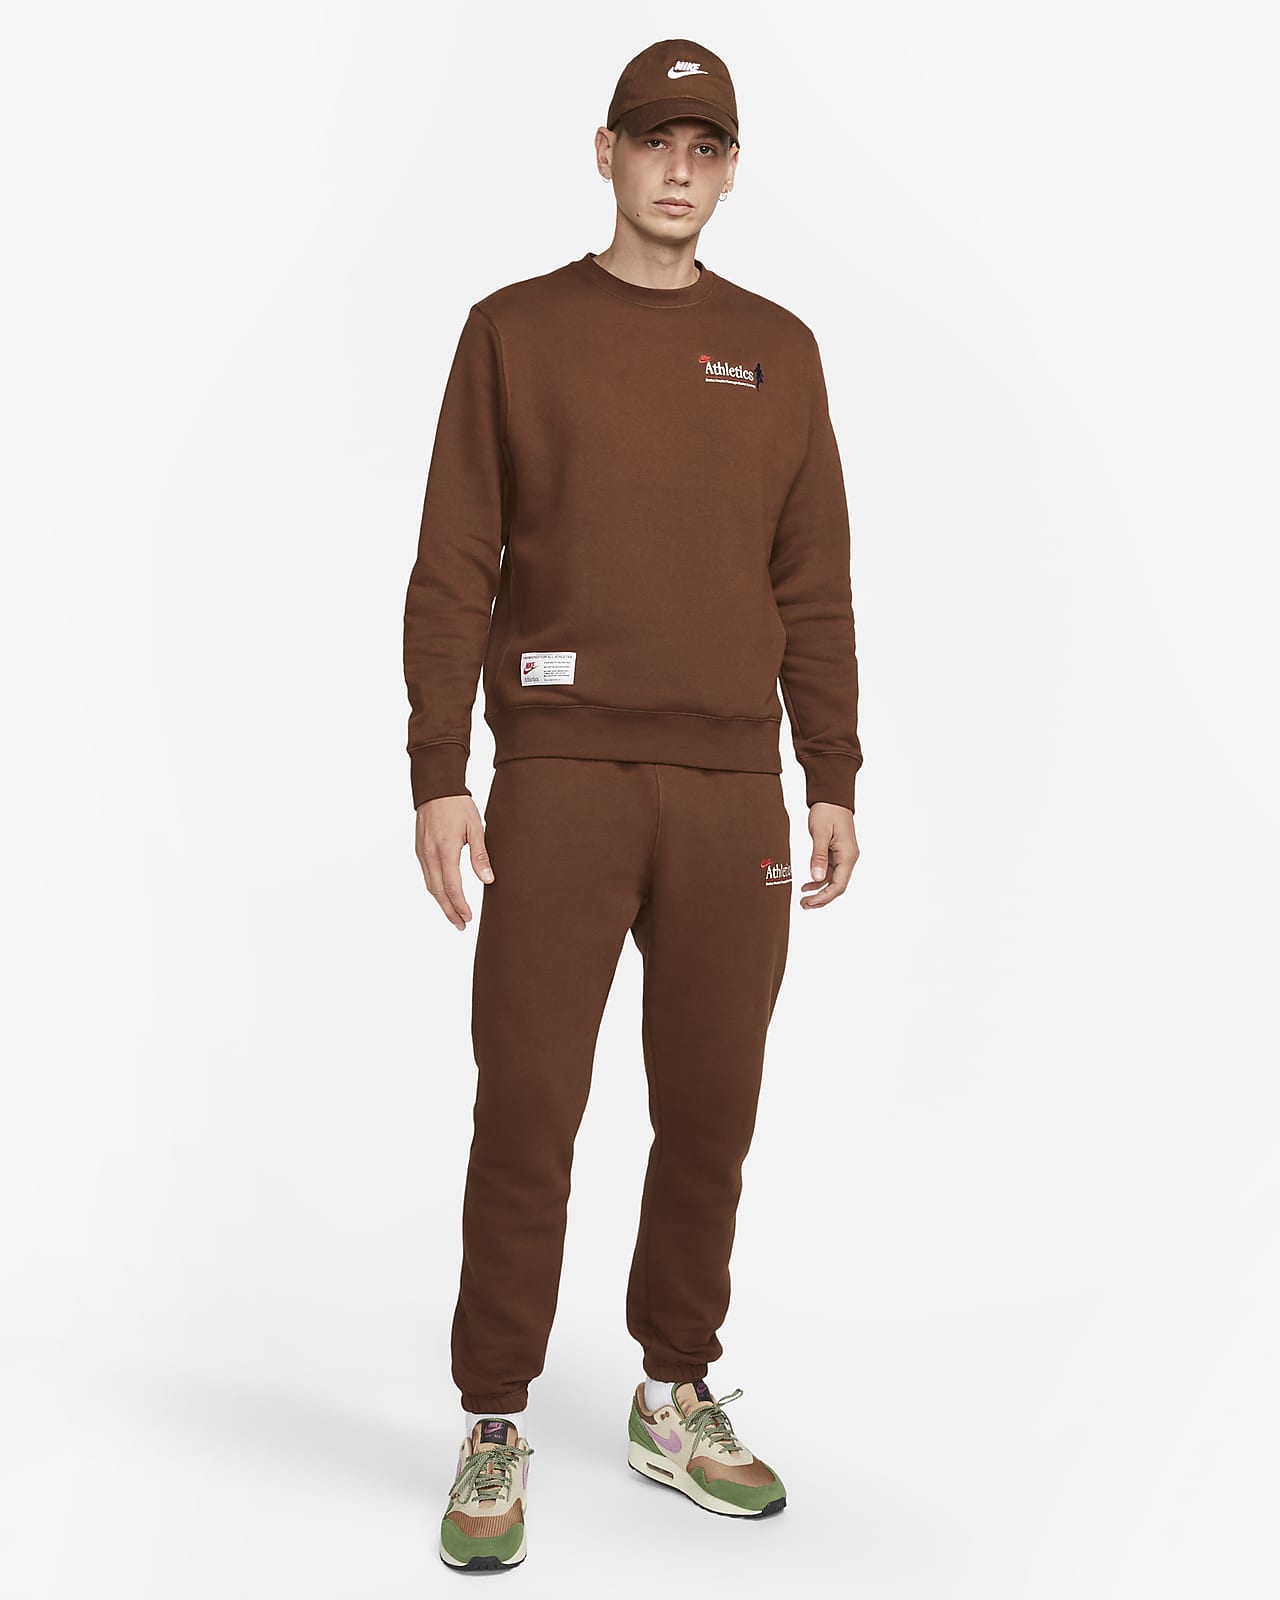 Sweats Homme, Nike Foundation Crew Sweatshirt Blanc